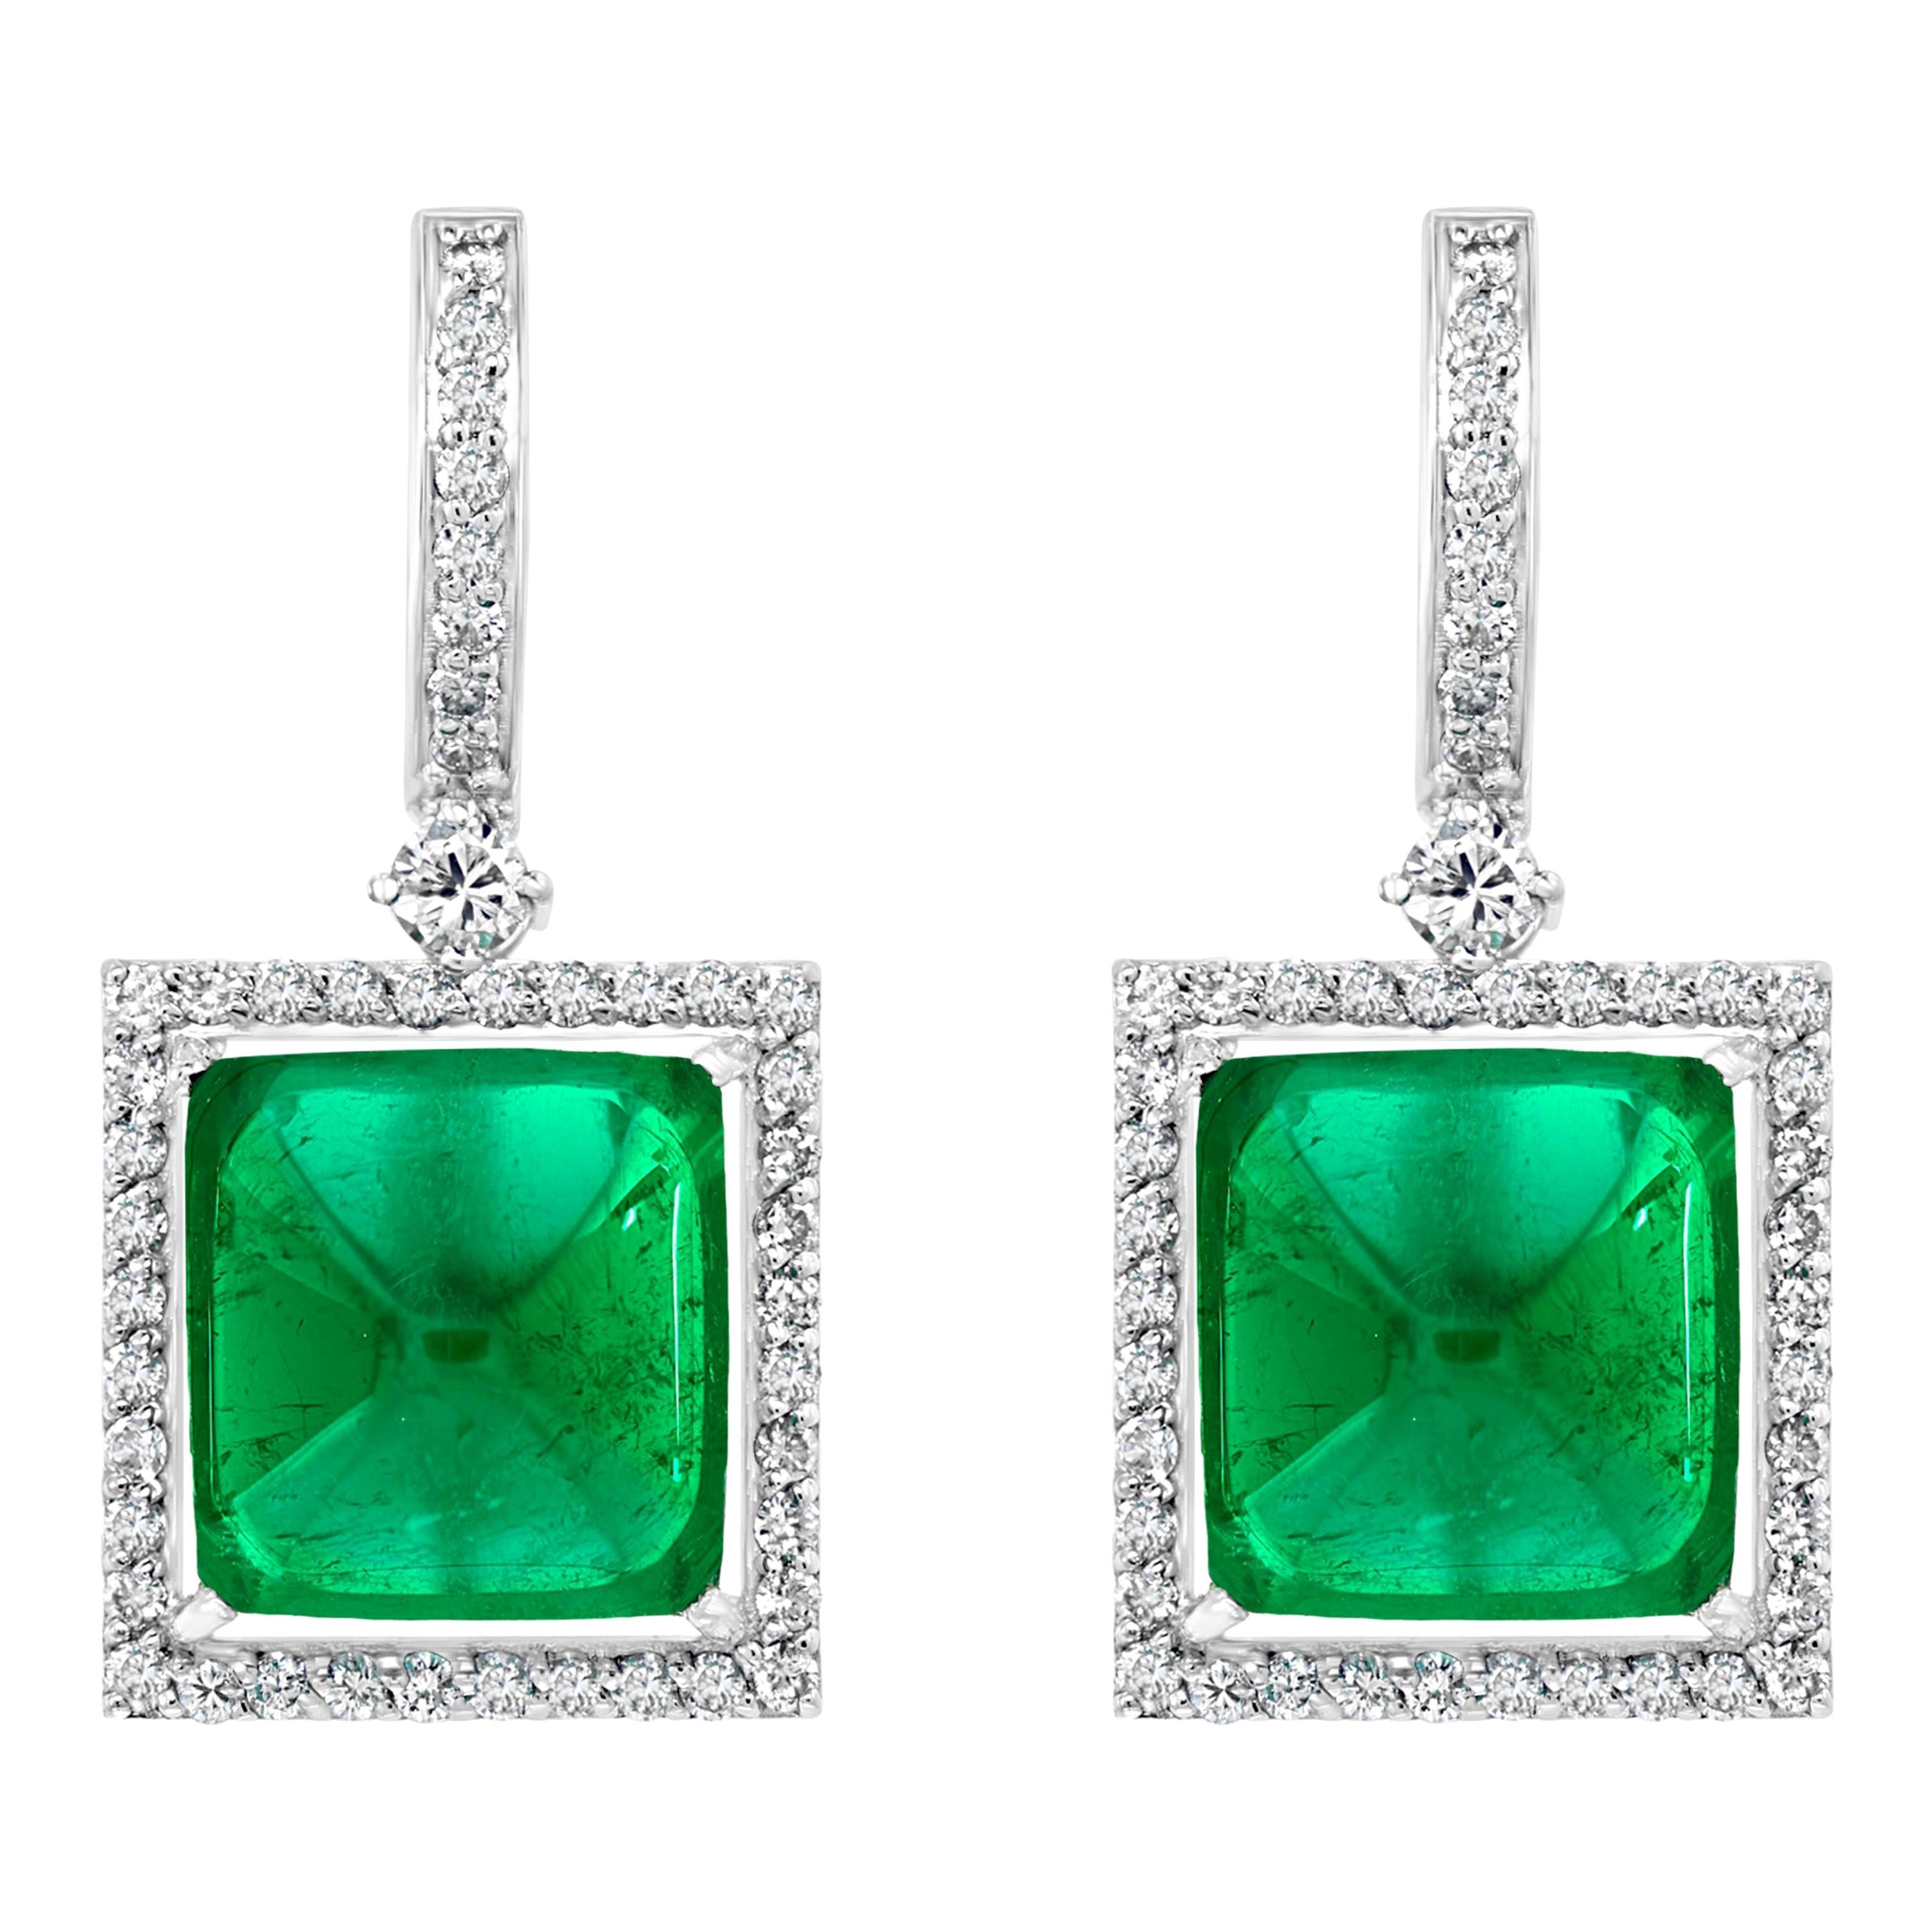 32Carat Natural Zambian Emerald Sugar Loaf Cabochon & Diamond/Drop Earrings 18KG